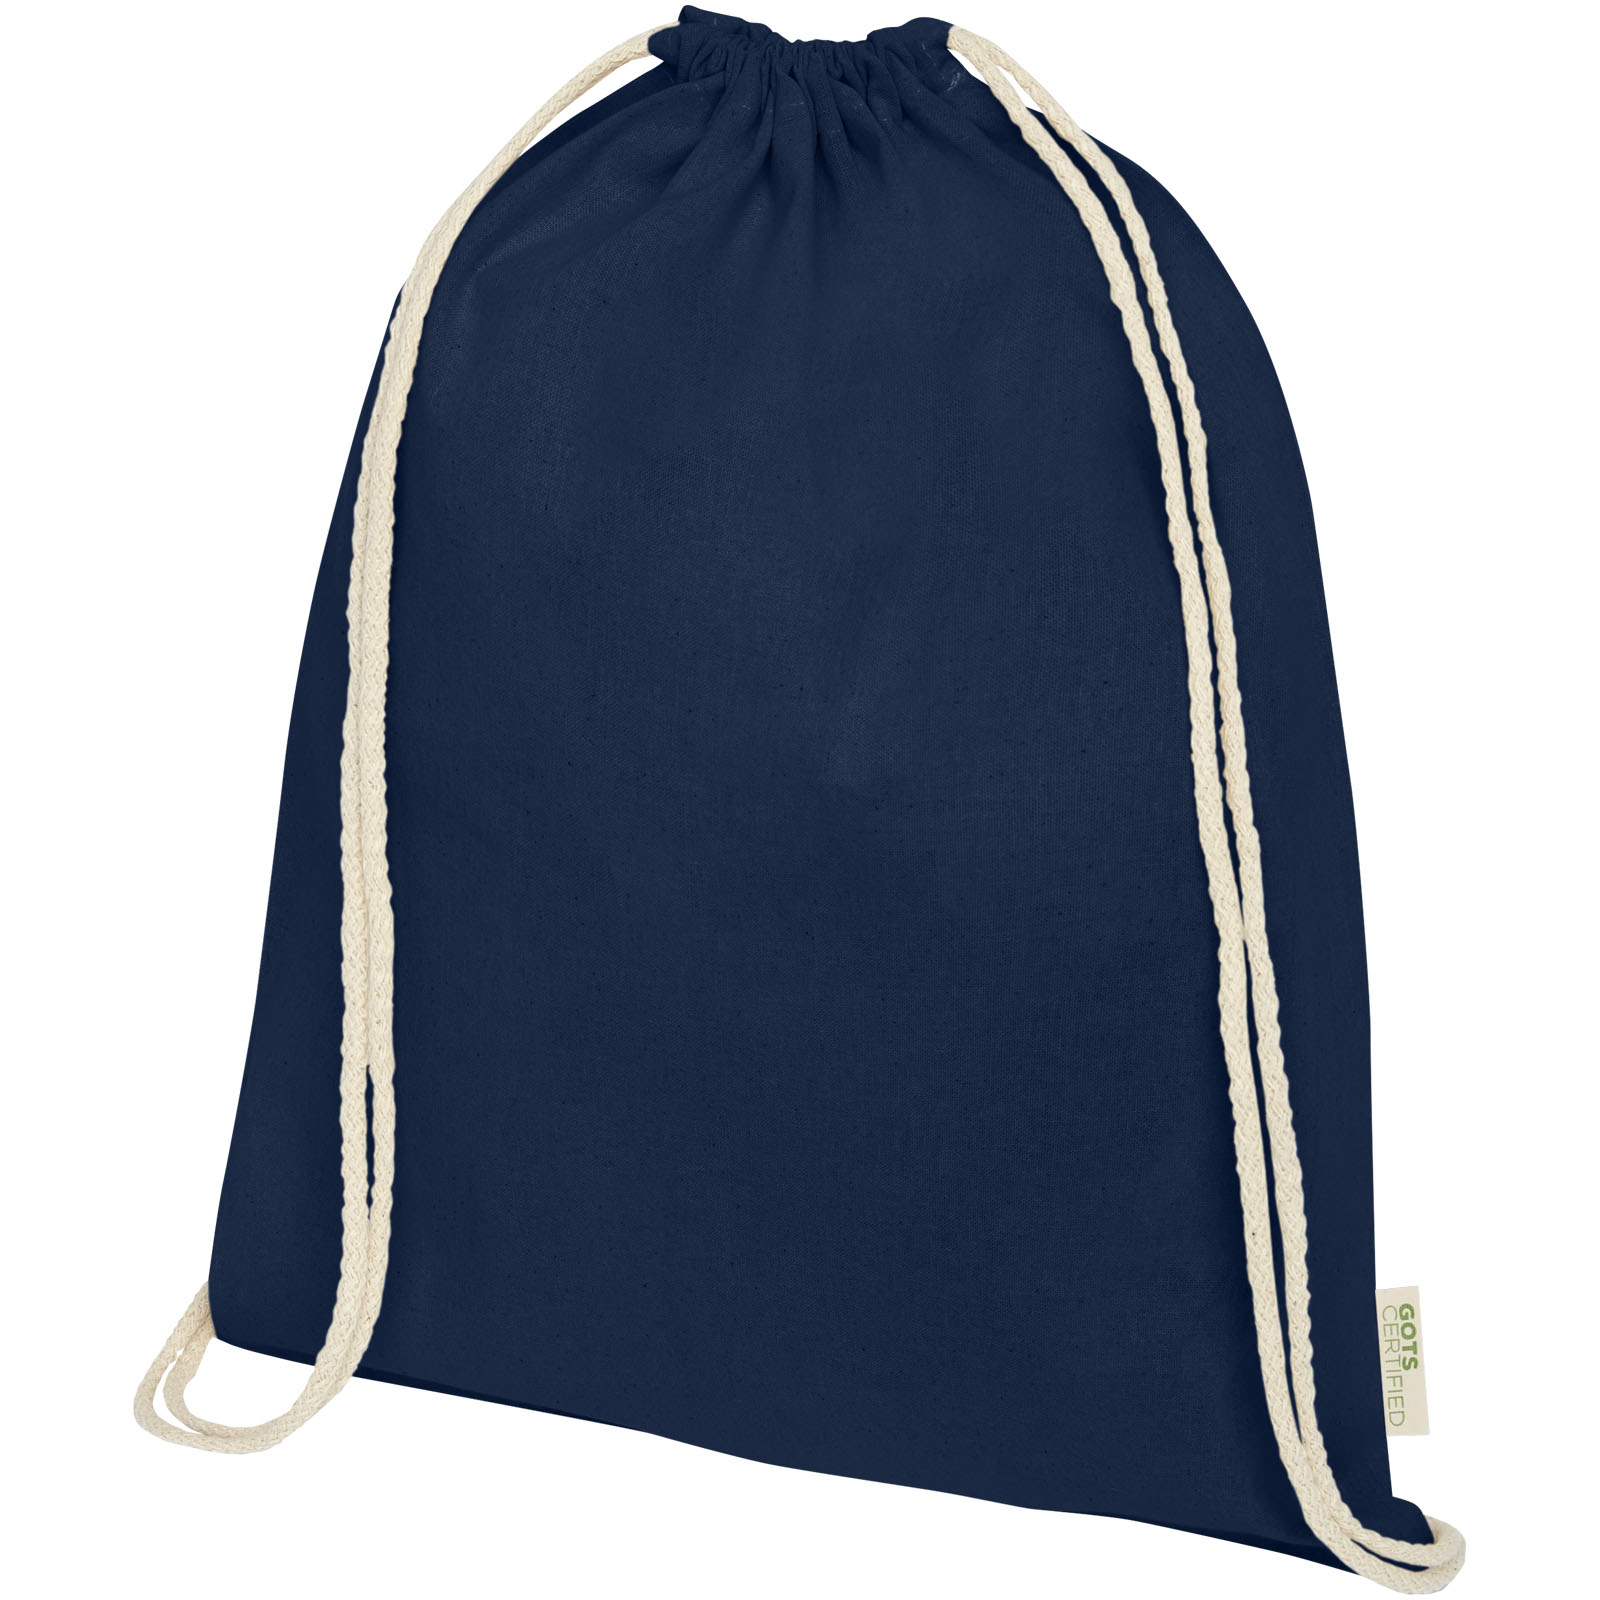 Bolsa mochila cuerdas de algodón